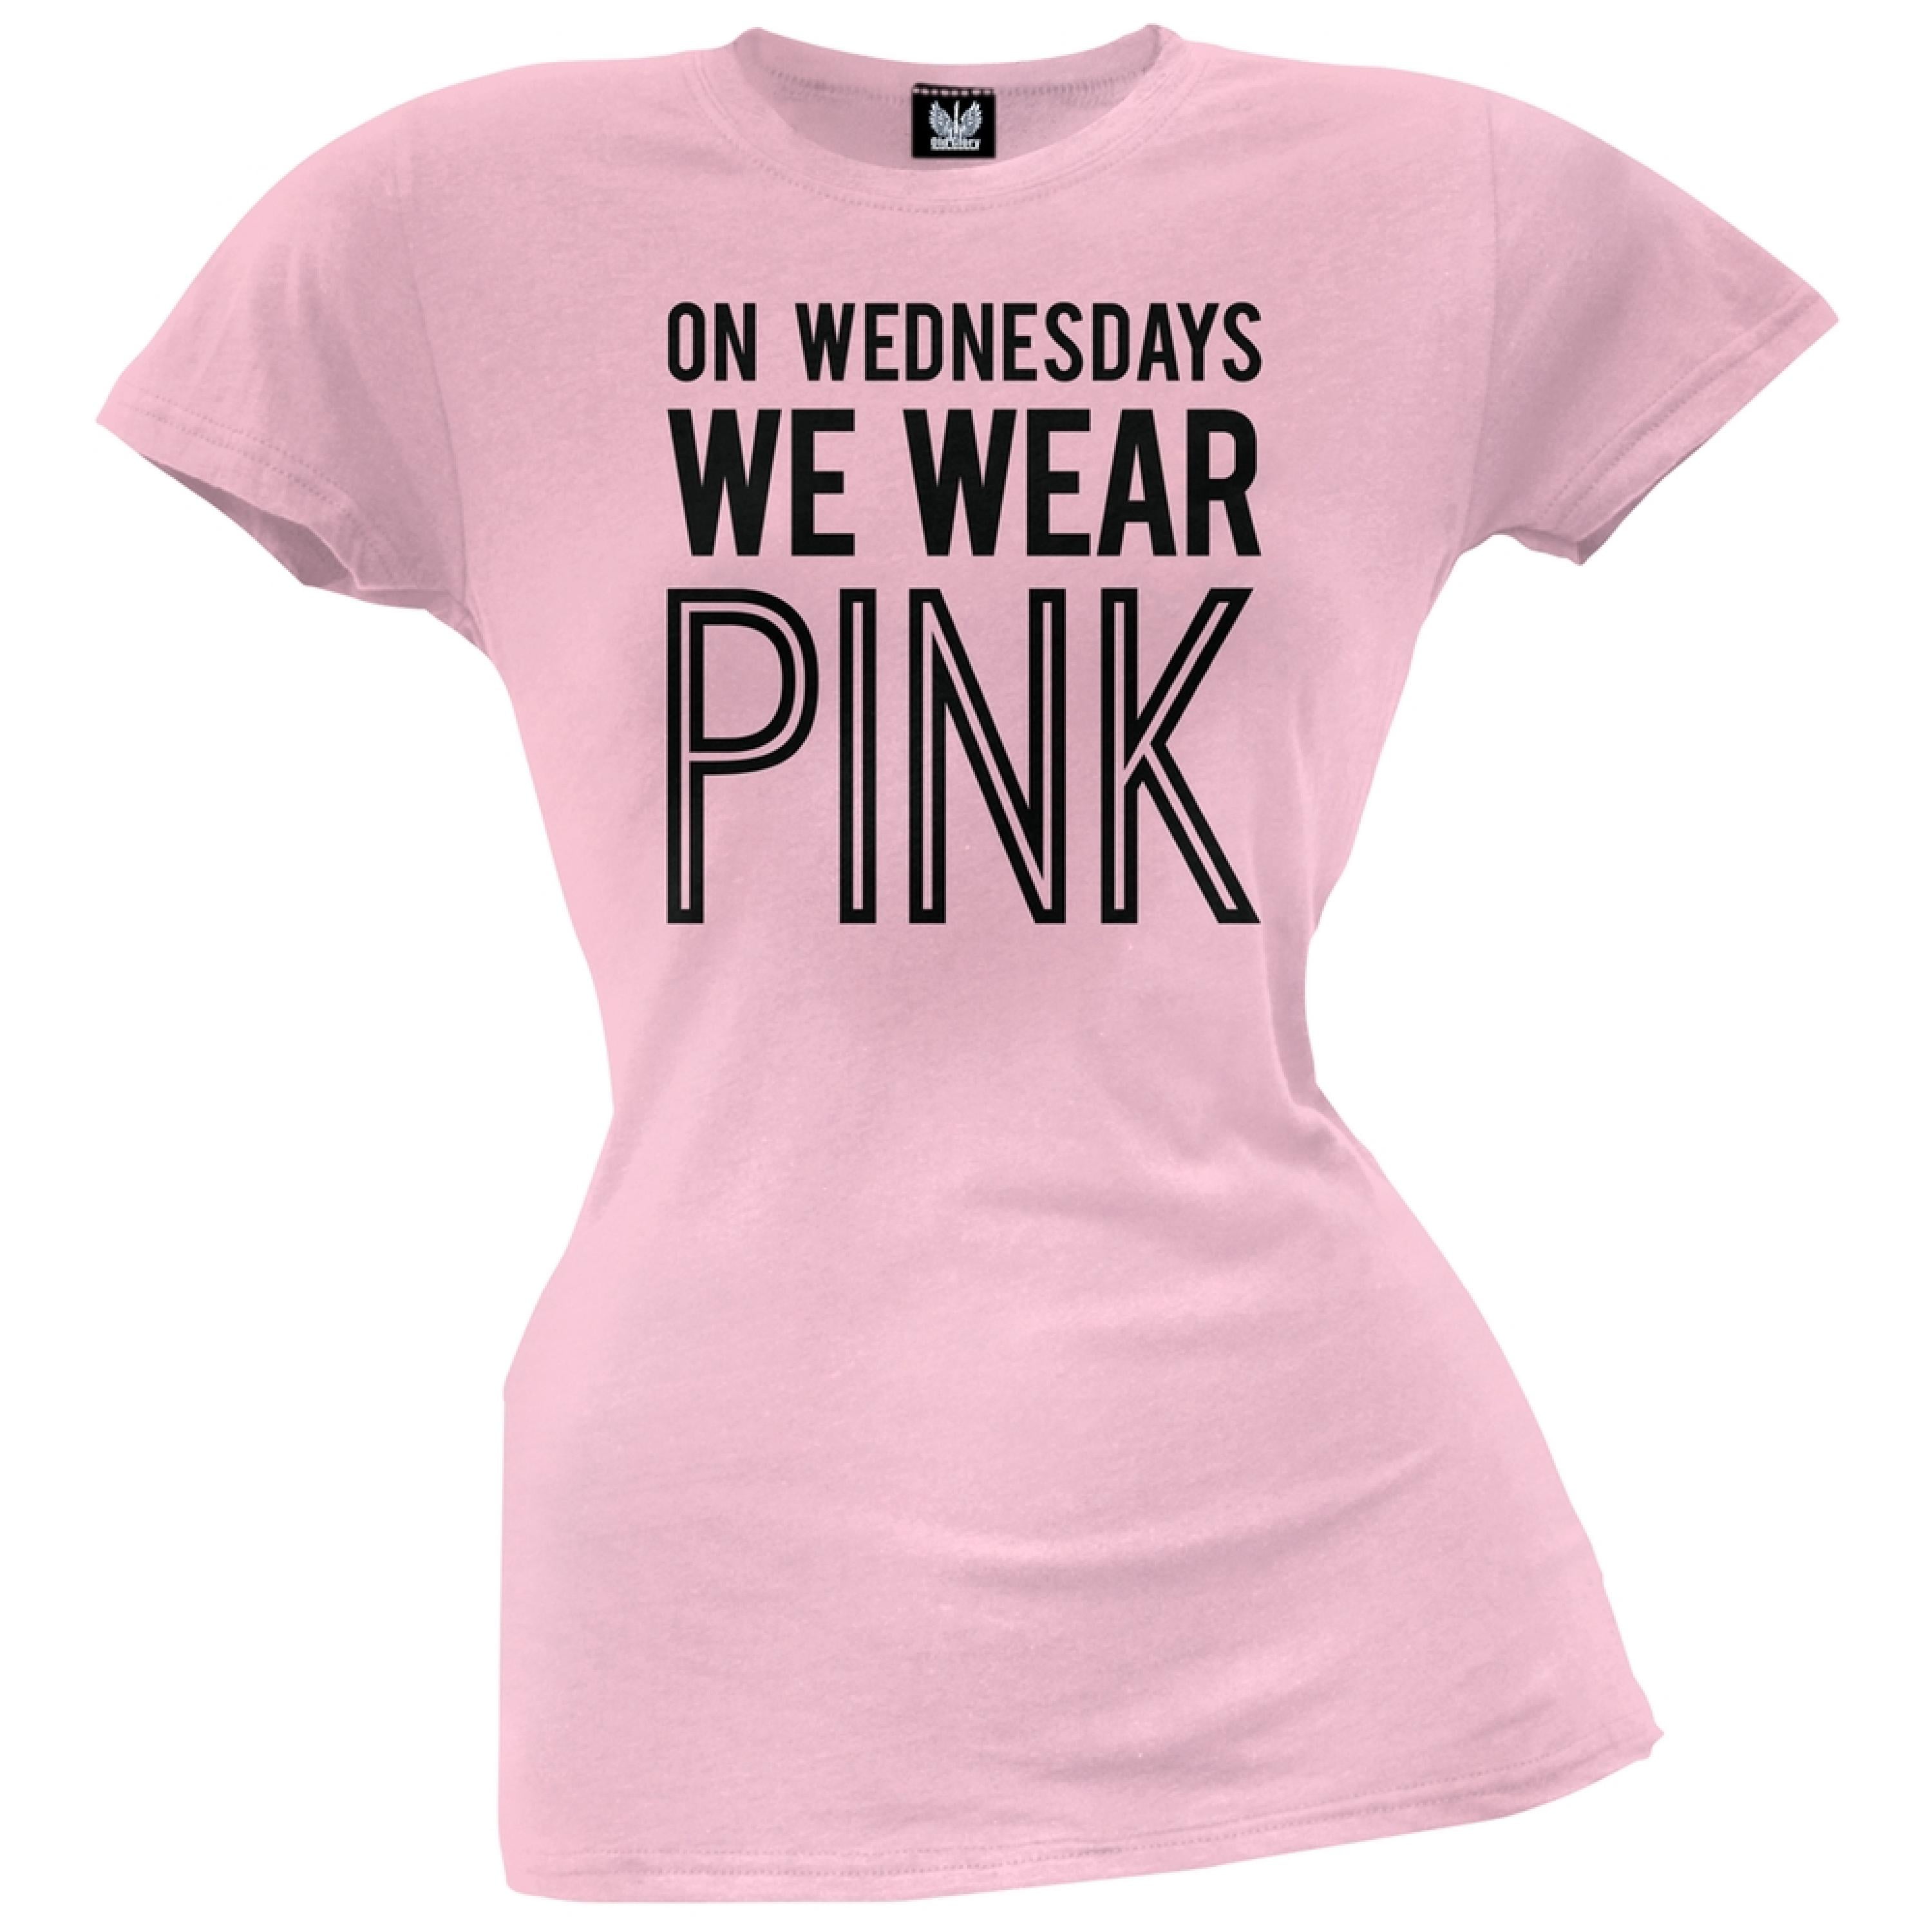 We Wear Pink футболка. On Wednesday we Wear Pink. Одежда Wednesday. Футболка Wednesday женская. Wear перевести